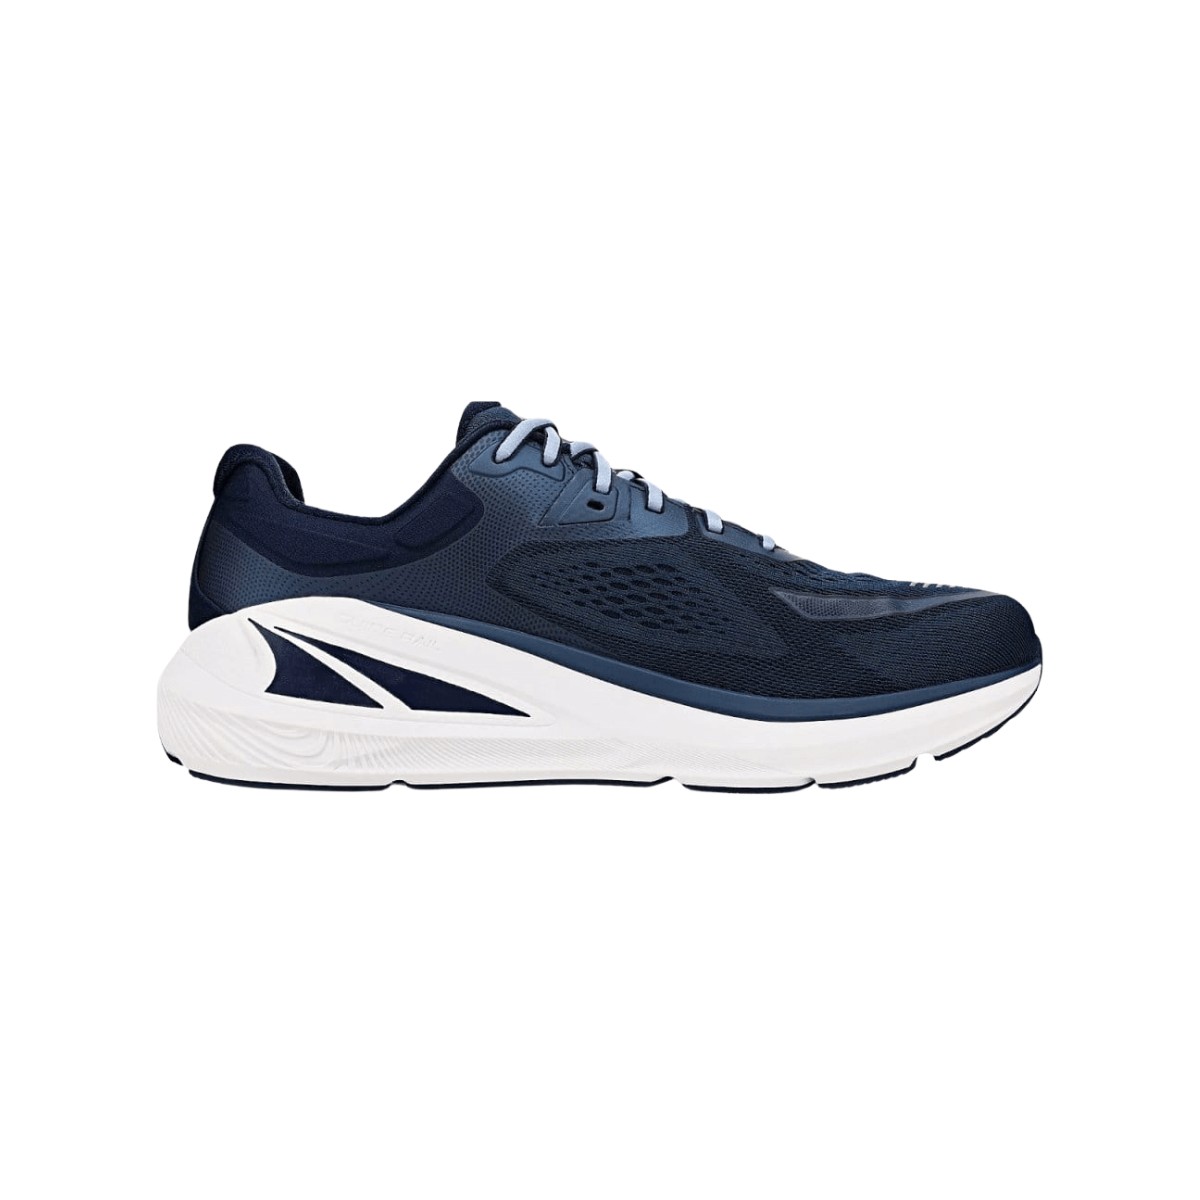 Altra Paradigma 6.0 Schuhe Blau AW22, Größe 42 - EUR